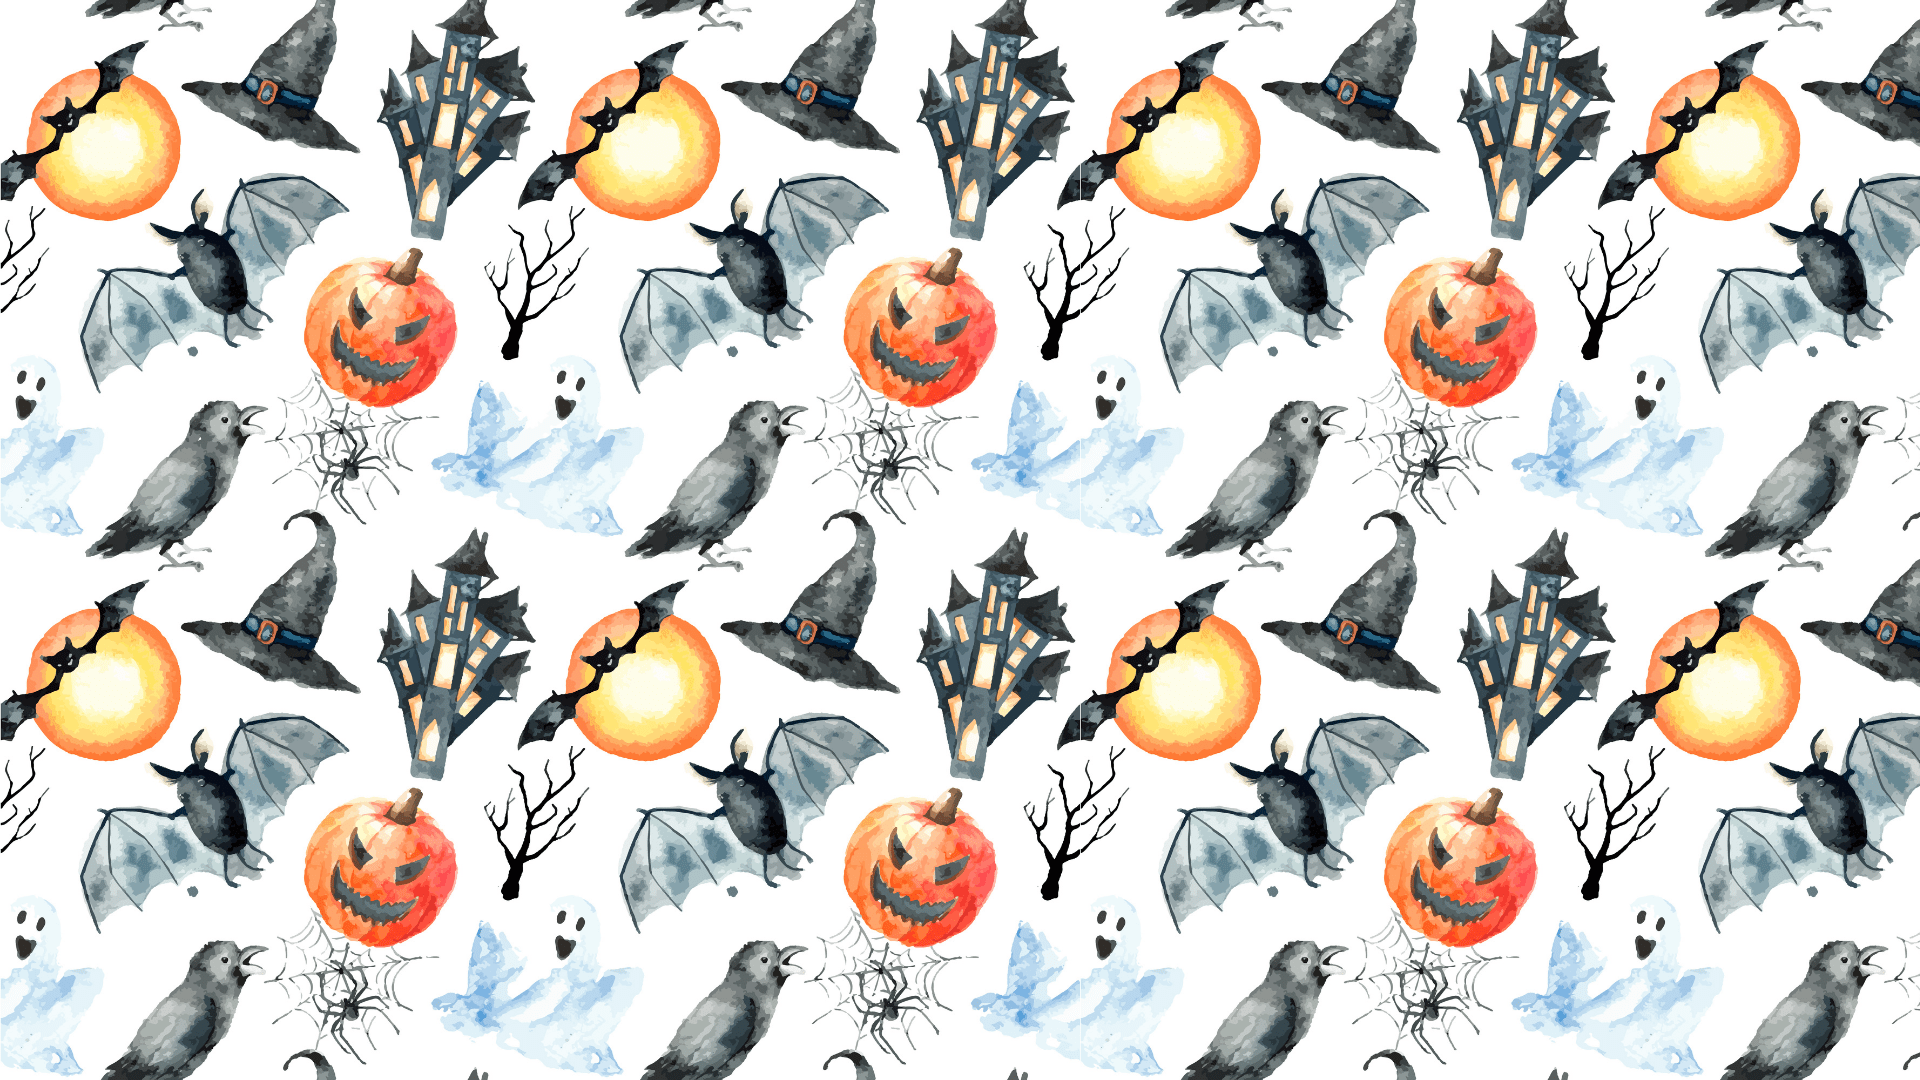 Halloween Aesthetic Wallpaper Background (FREE DOWNLOAD)